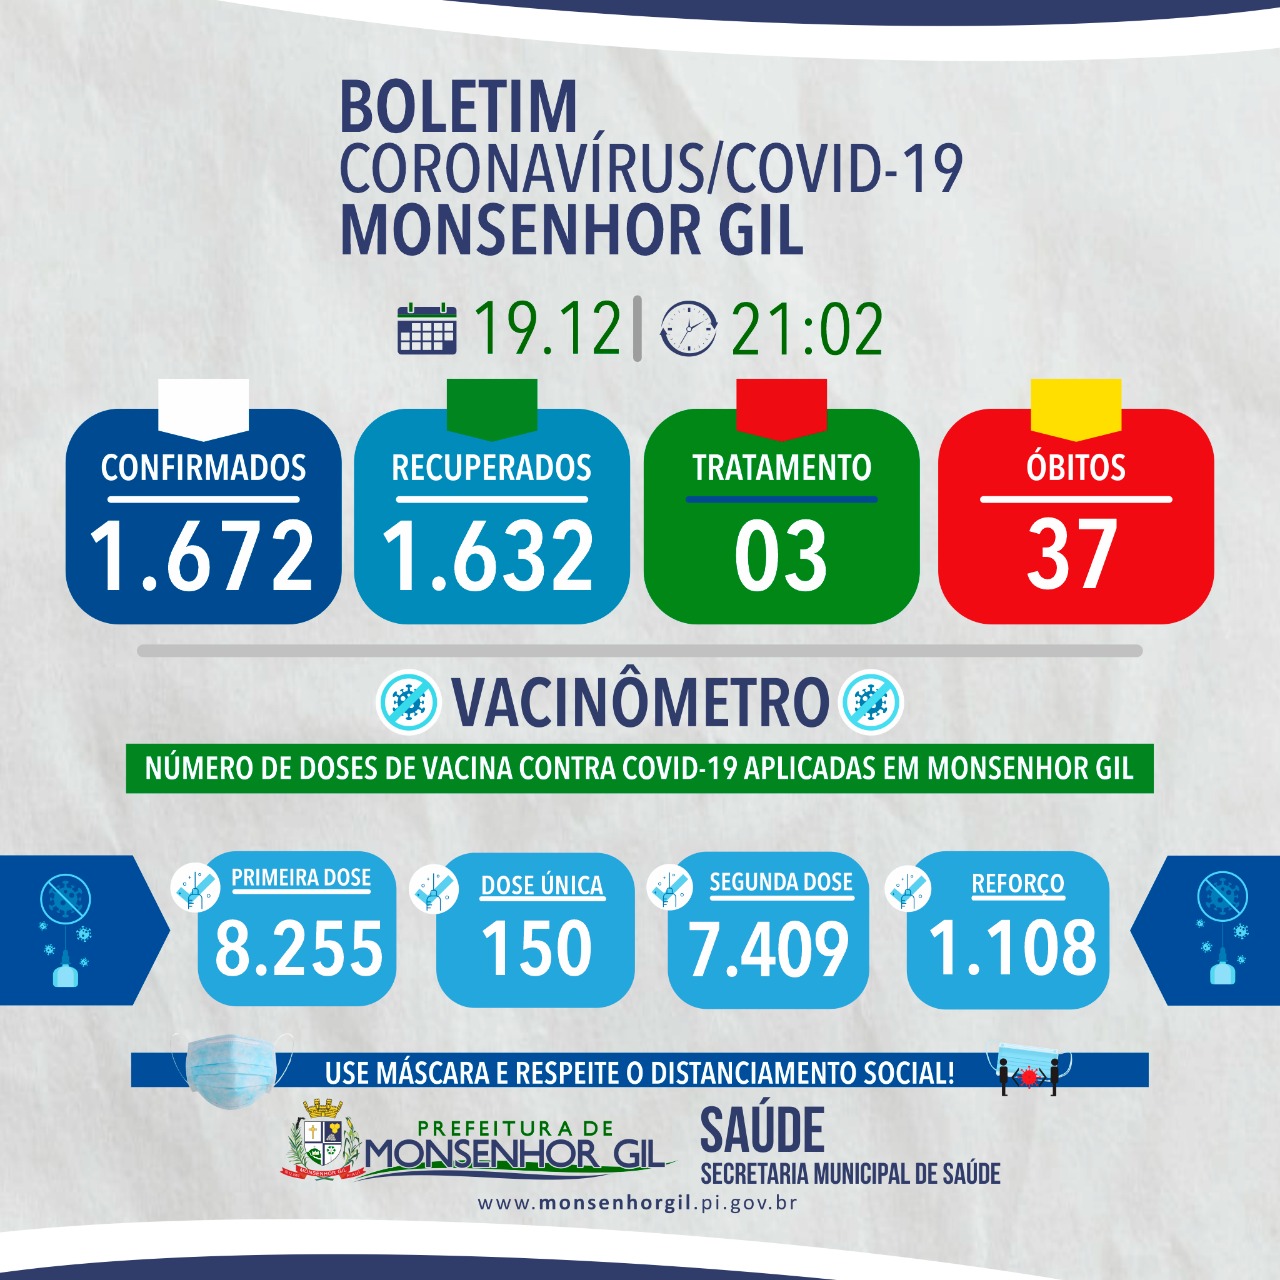 BOLETIM EPIDEMIOLÓGICO - COVID-19 - Monsenhor Gil  19.12.2021